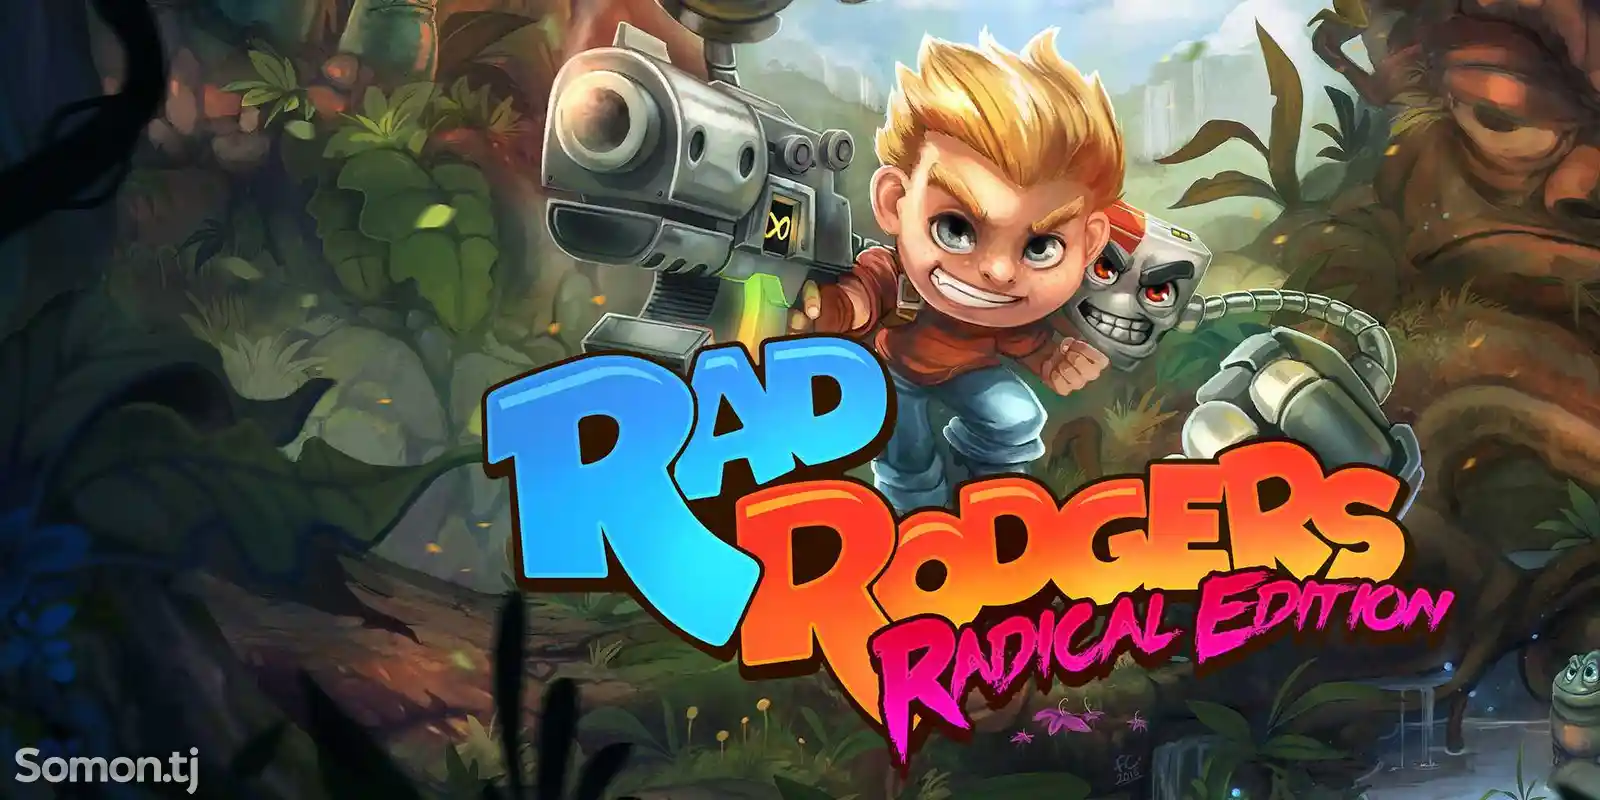 Игра Rad rodgers для PS-4 / 5.05 / 6.72 / 7.02 / 7.55 / 9.00